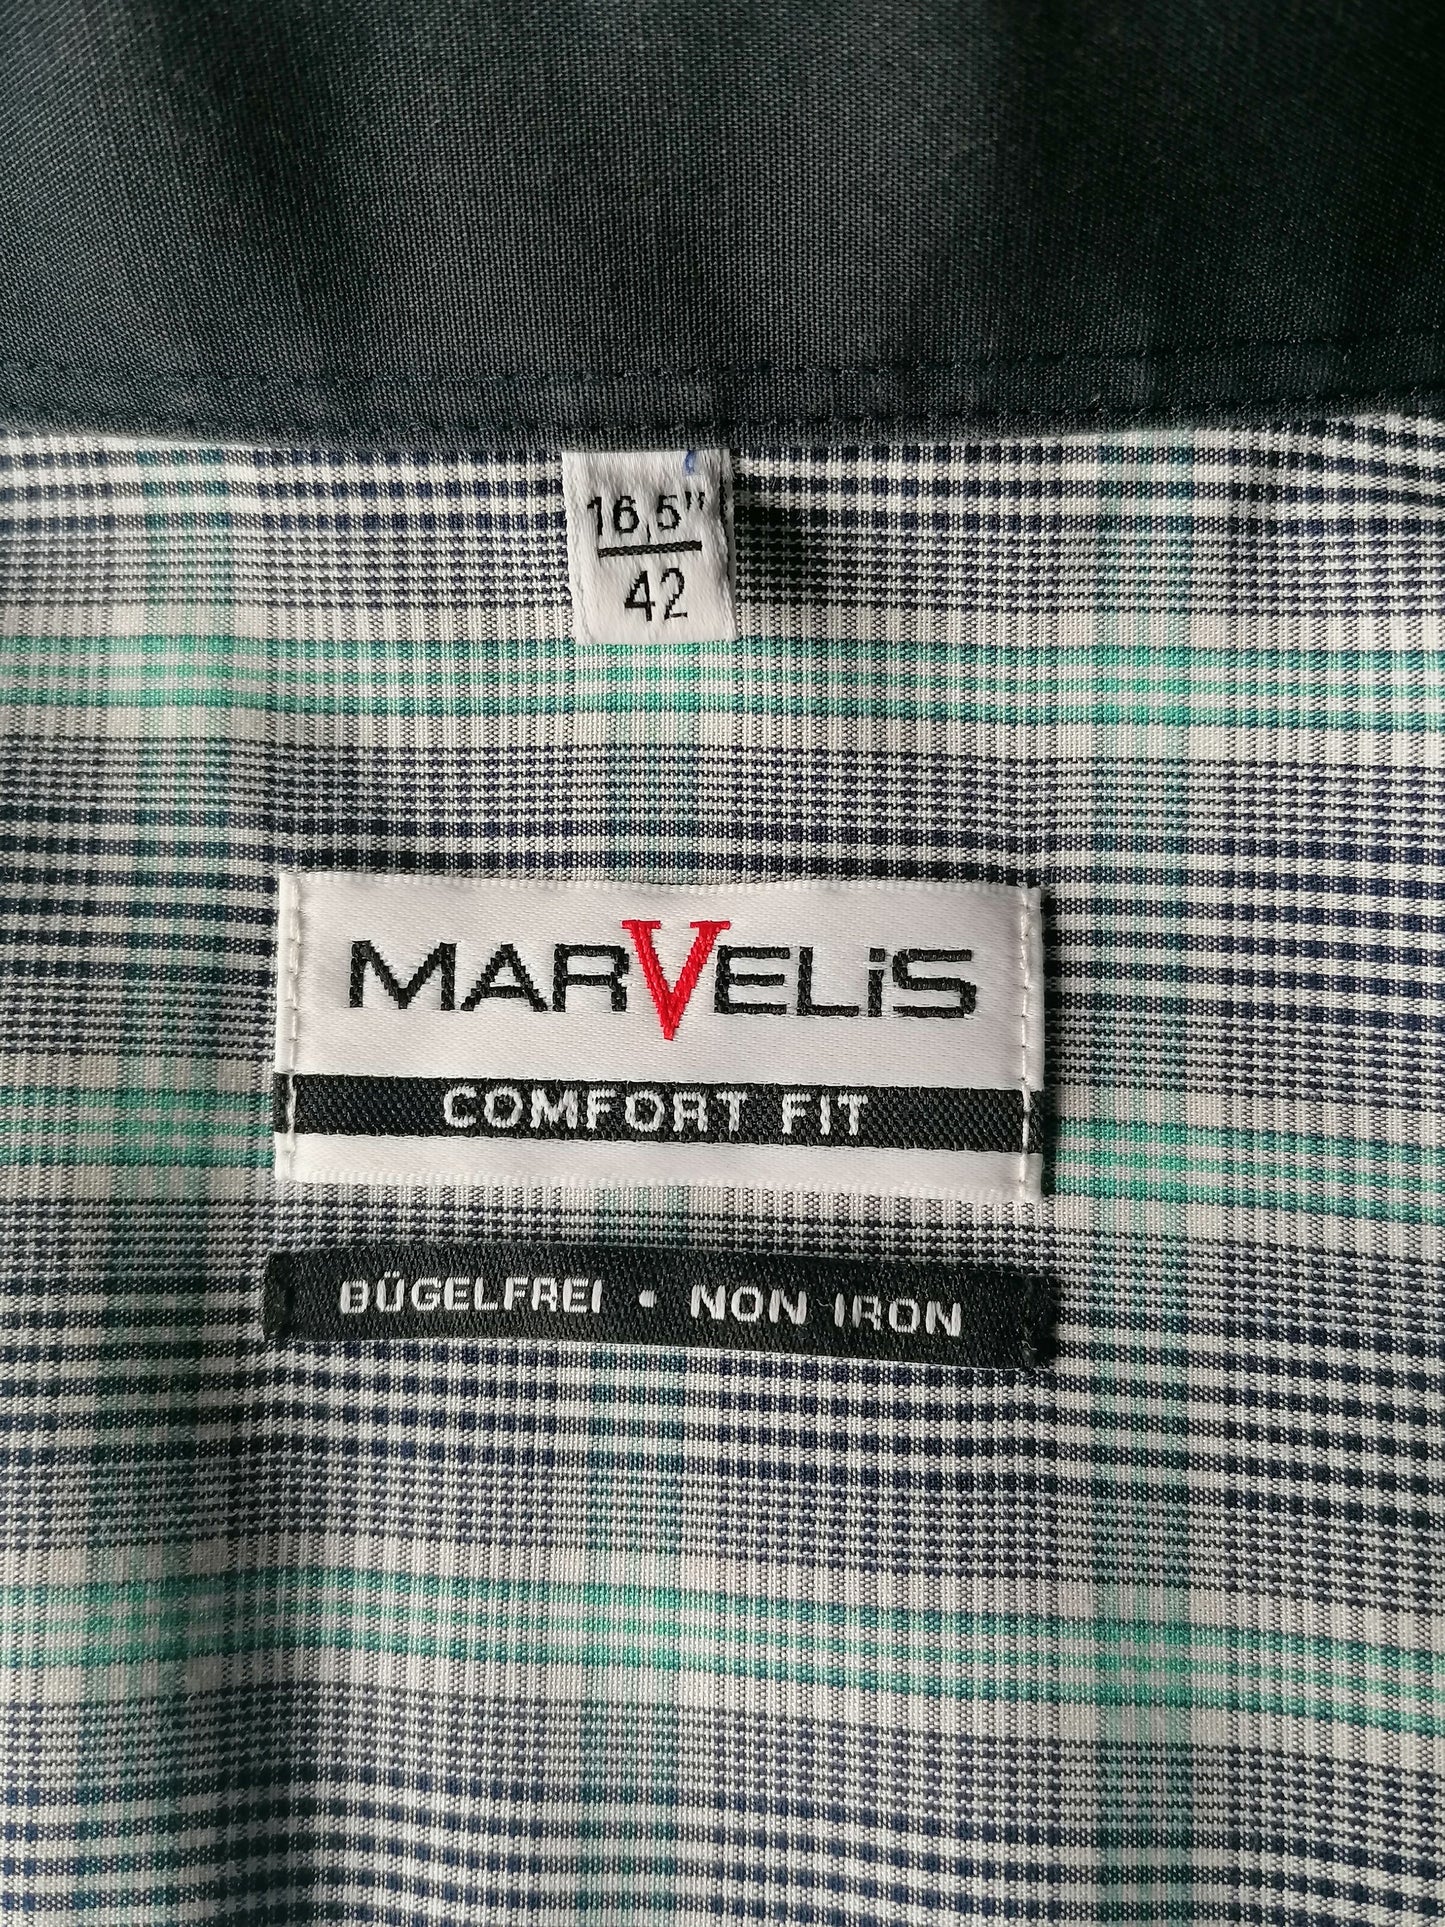 Marvelis -Shirt. Blaugrün weißer kariert. Größe 42. L. Komfort passt.